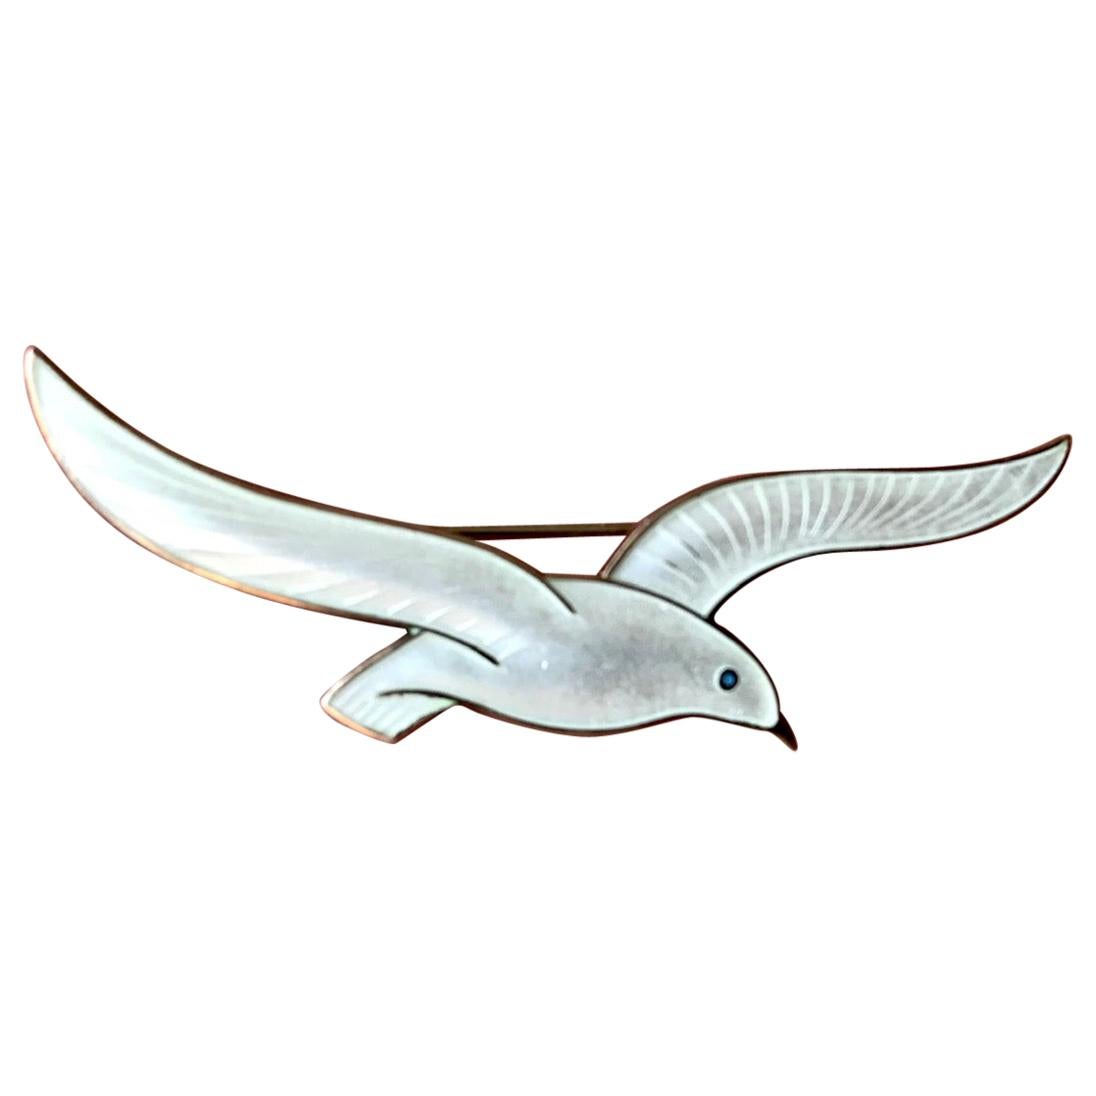 Vintage Scandinavian Peace Dove Pin Brooch in Silver and Enamel guilloche, 1950s